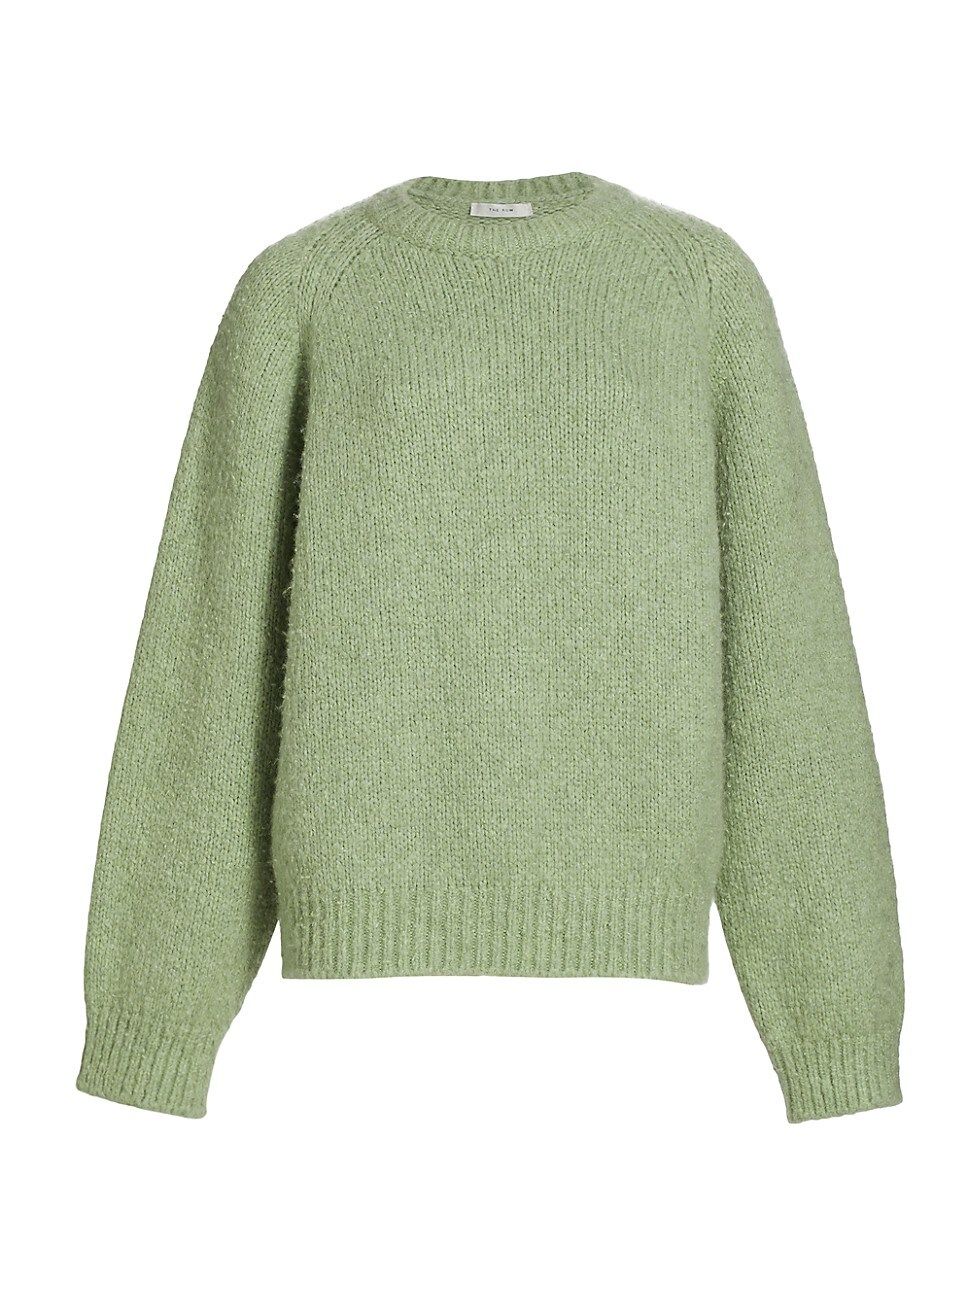 Women's Druna Cashmere Sweater - Sea Foam - Size Small | Saks Fifth Avenue